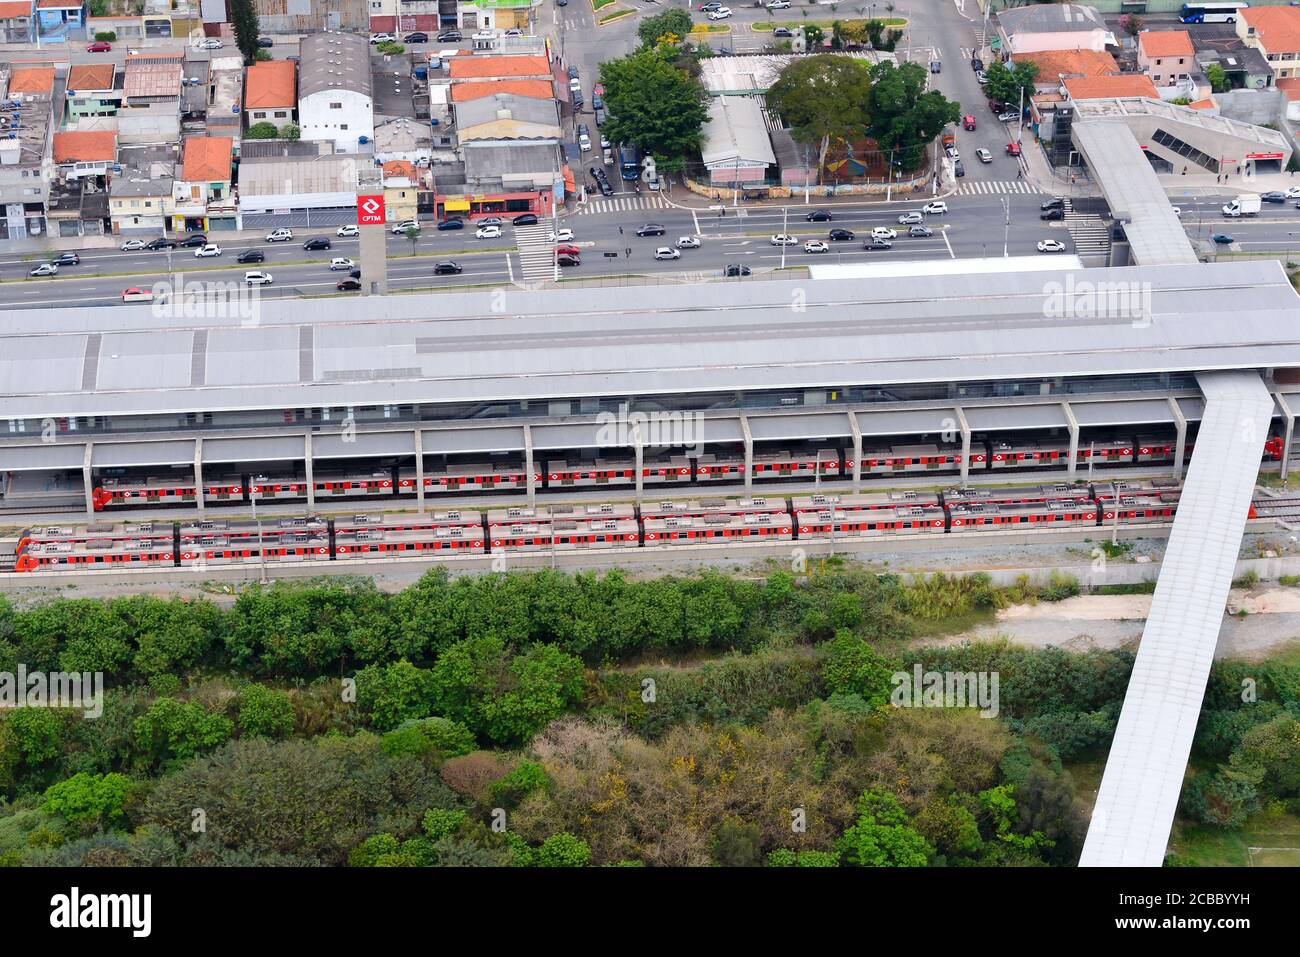 Engenheiro Goulart Train Station in Sao Paulo, Brazil. Administered by  São Paulo Metropolitan Trains Company / Companhia Paulista de Trens (CPTM) Stock Photo